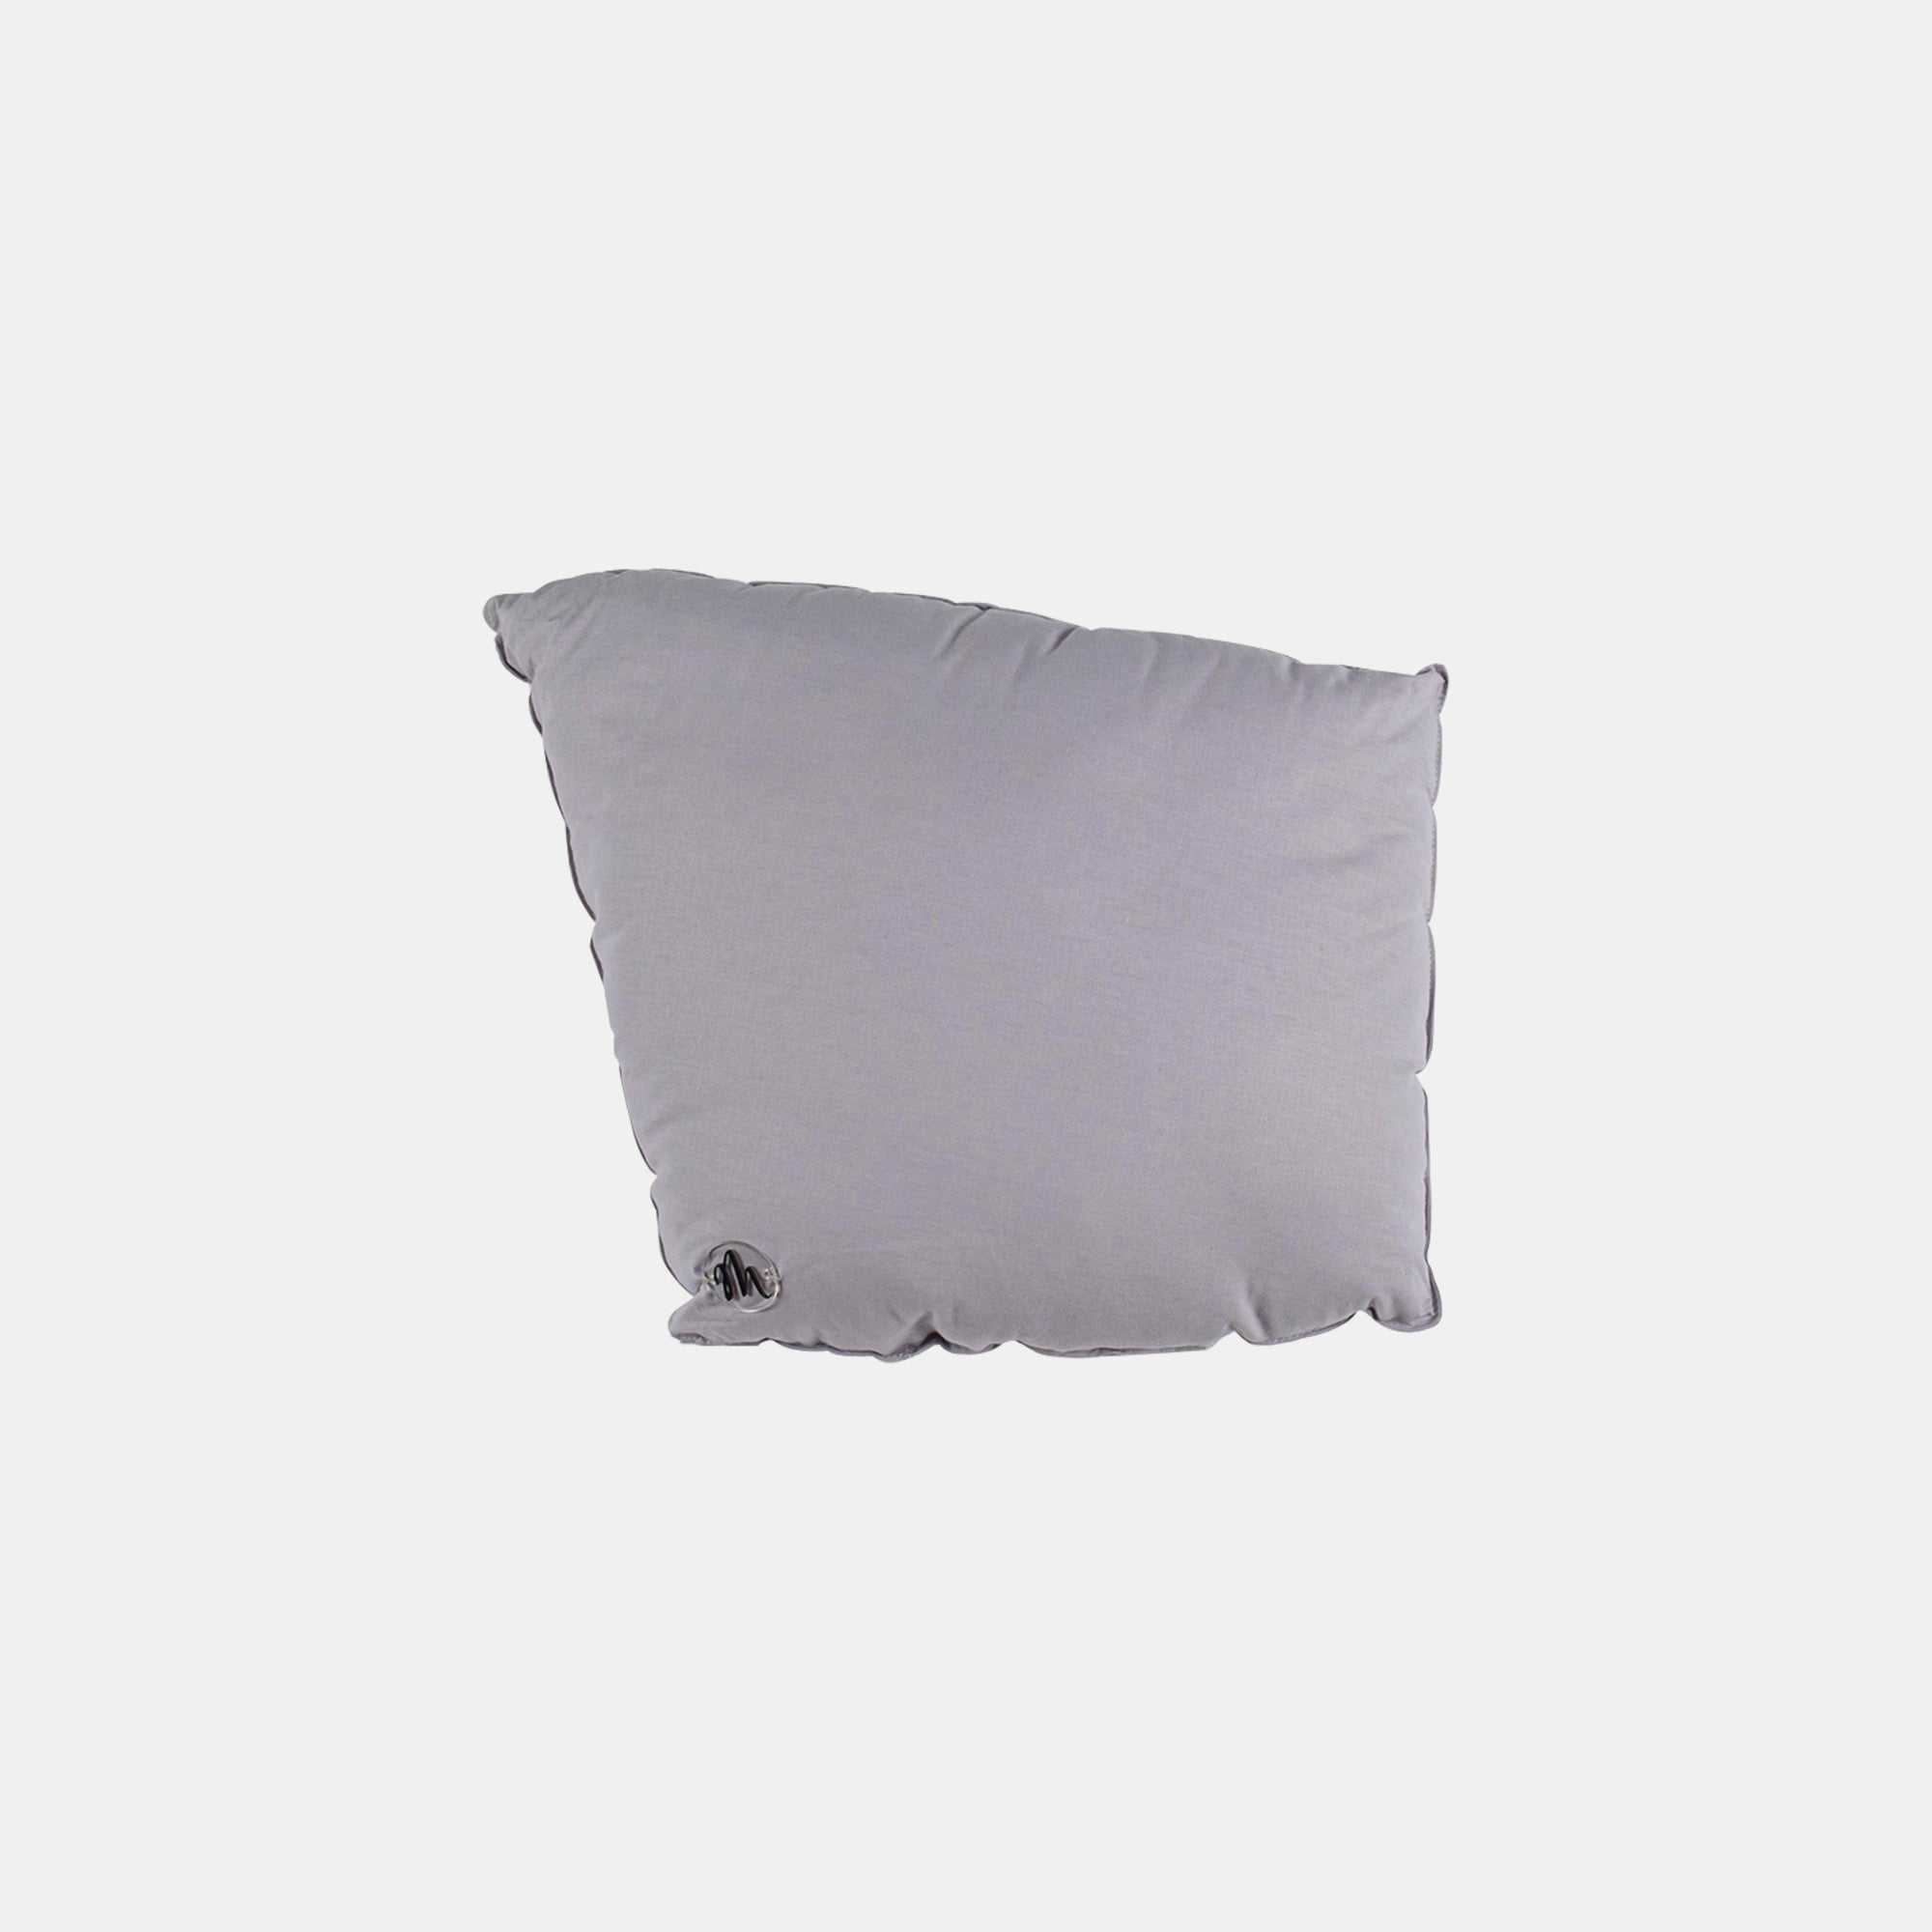 Handmade square shaped cushion